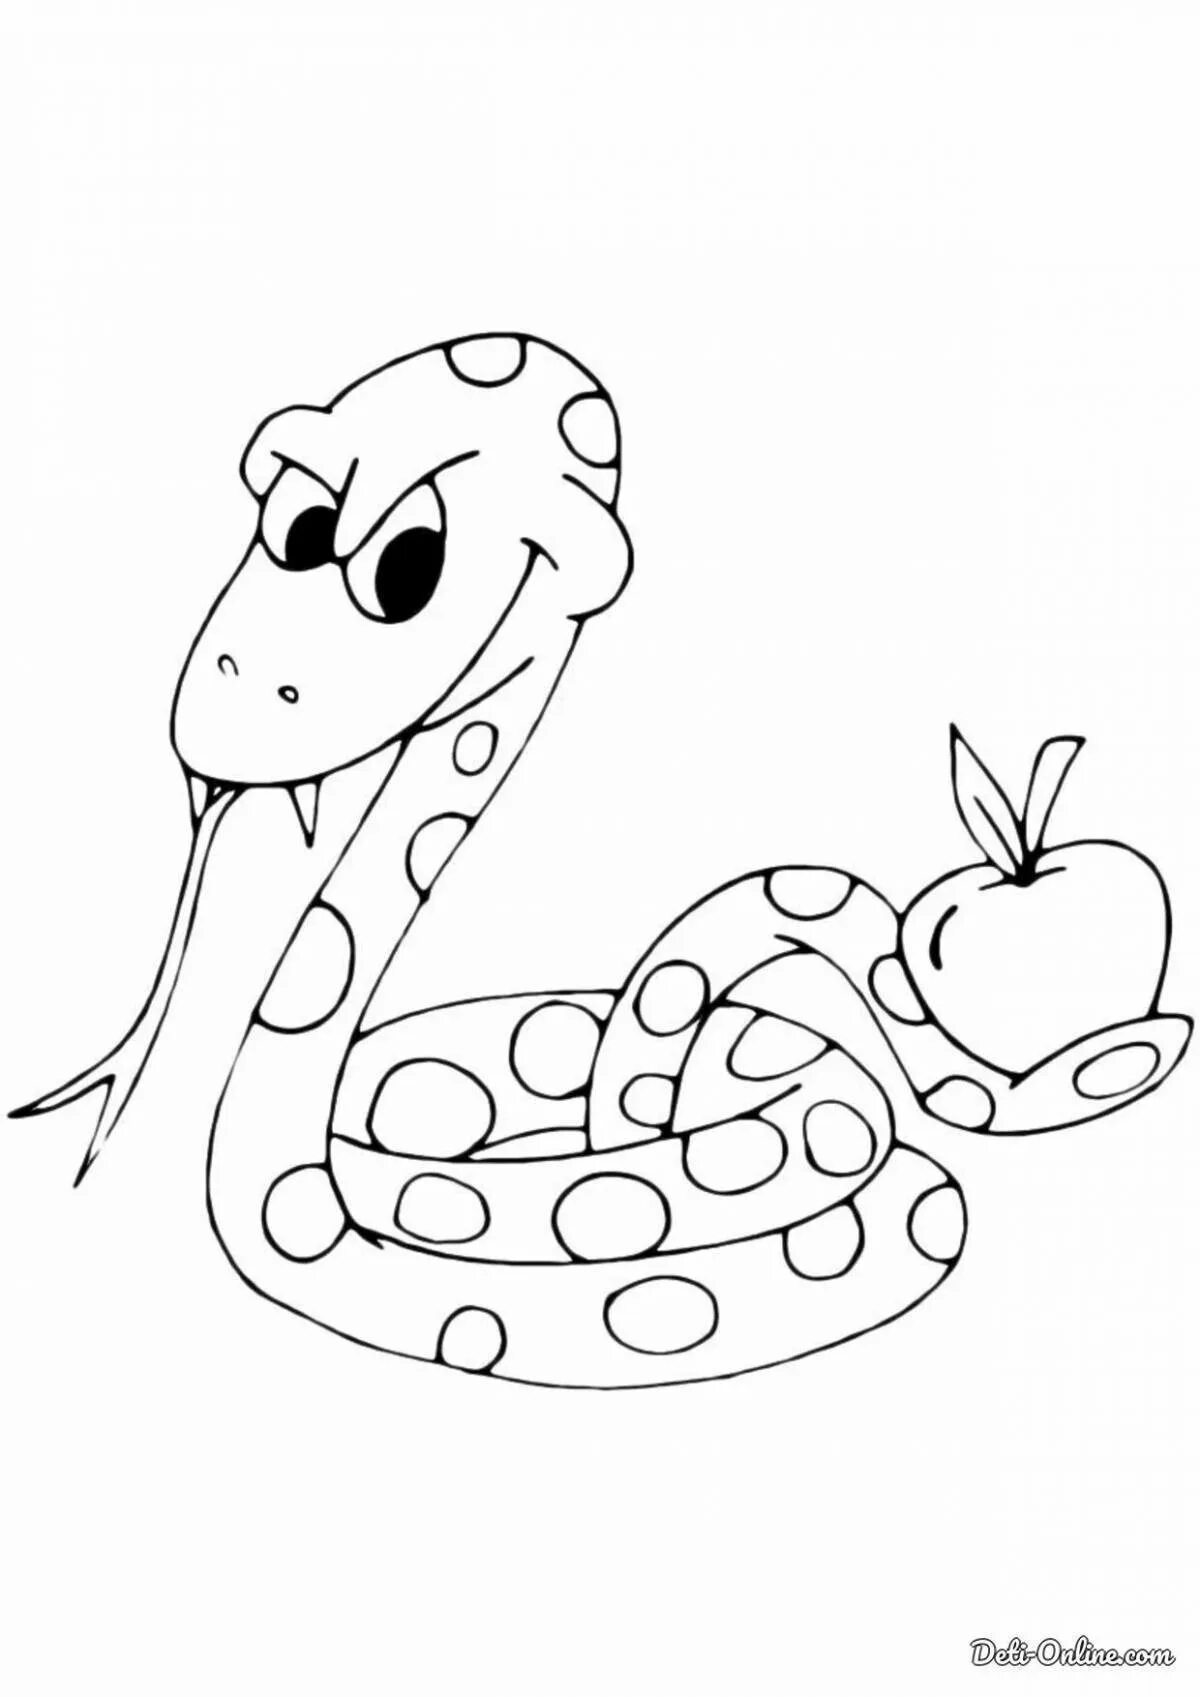 Раскраска змеи. Змейка раскраска. Раскраска змеи для детей. Змея картинка раскраска. Раскраска змей для детей